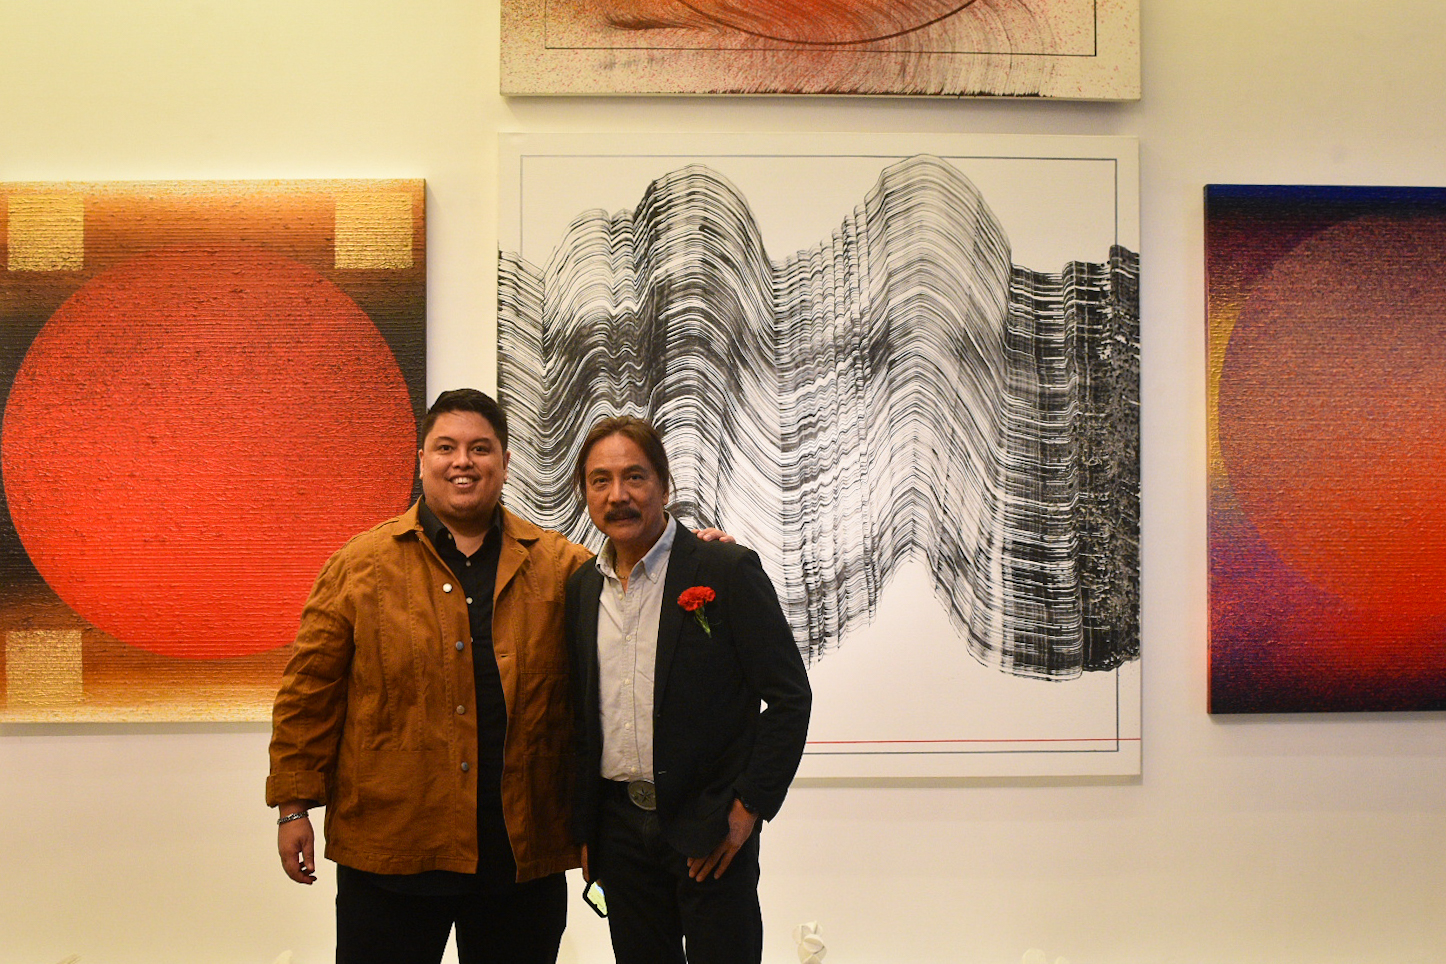 Nestor Olarte Vinluan with exhibition curator and UPCFA alumnus Patrick de Veyra